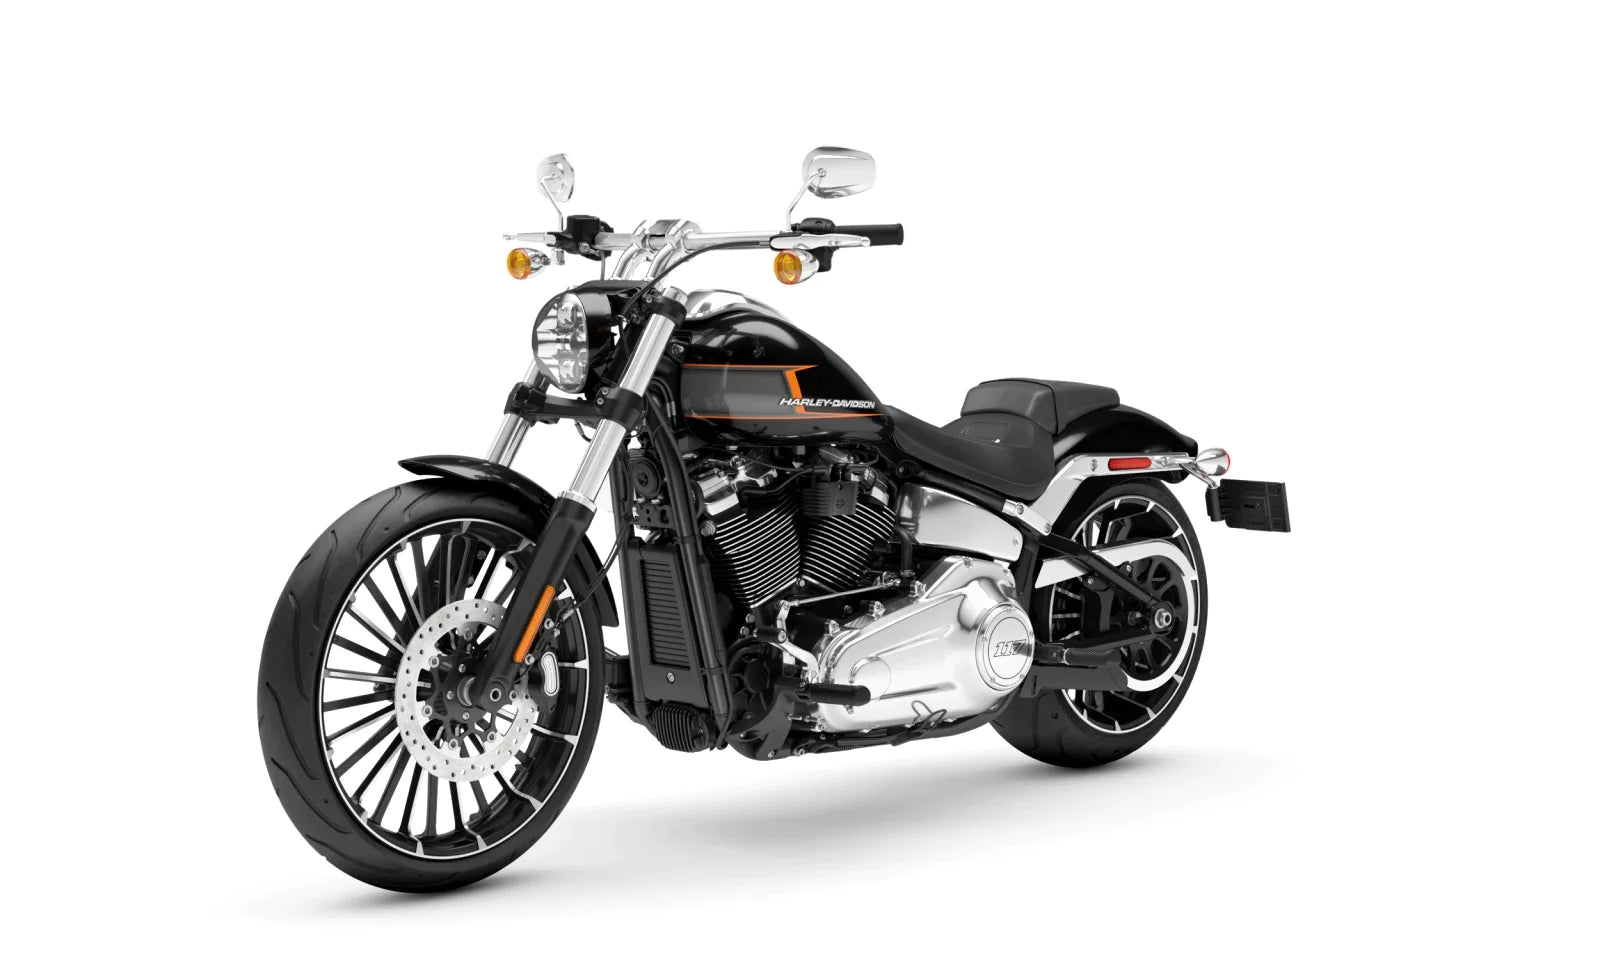 2024 Harley-Davidson Breakout design and aesthetics